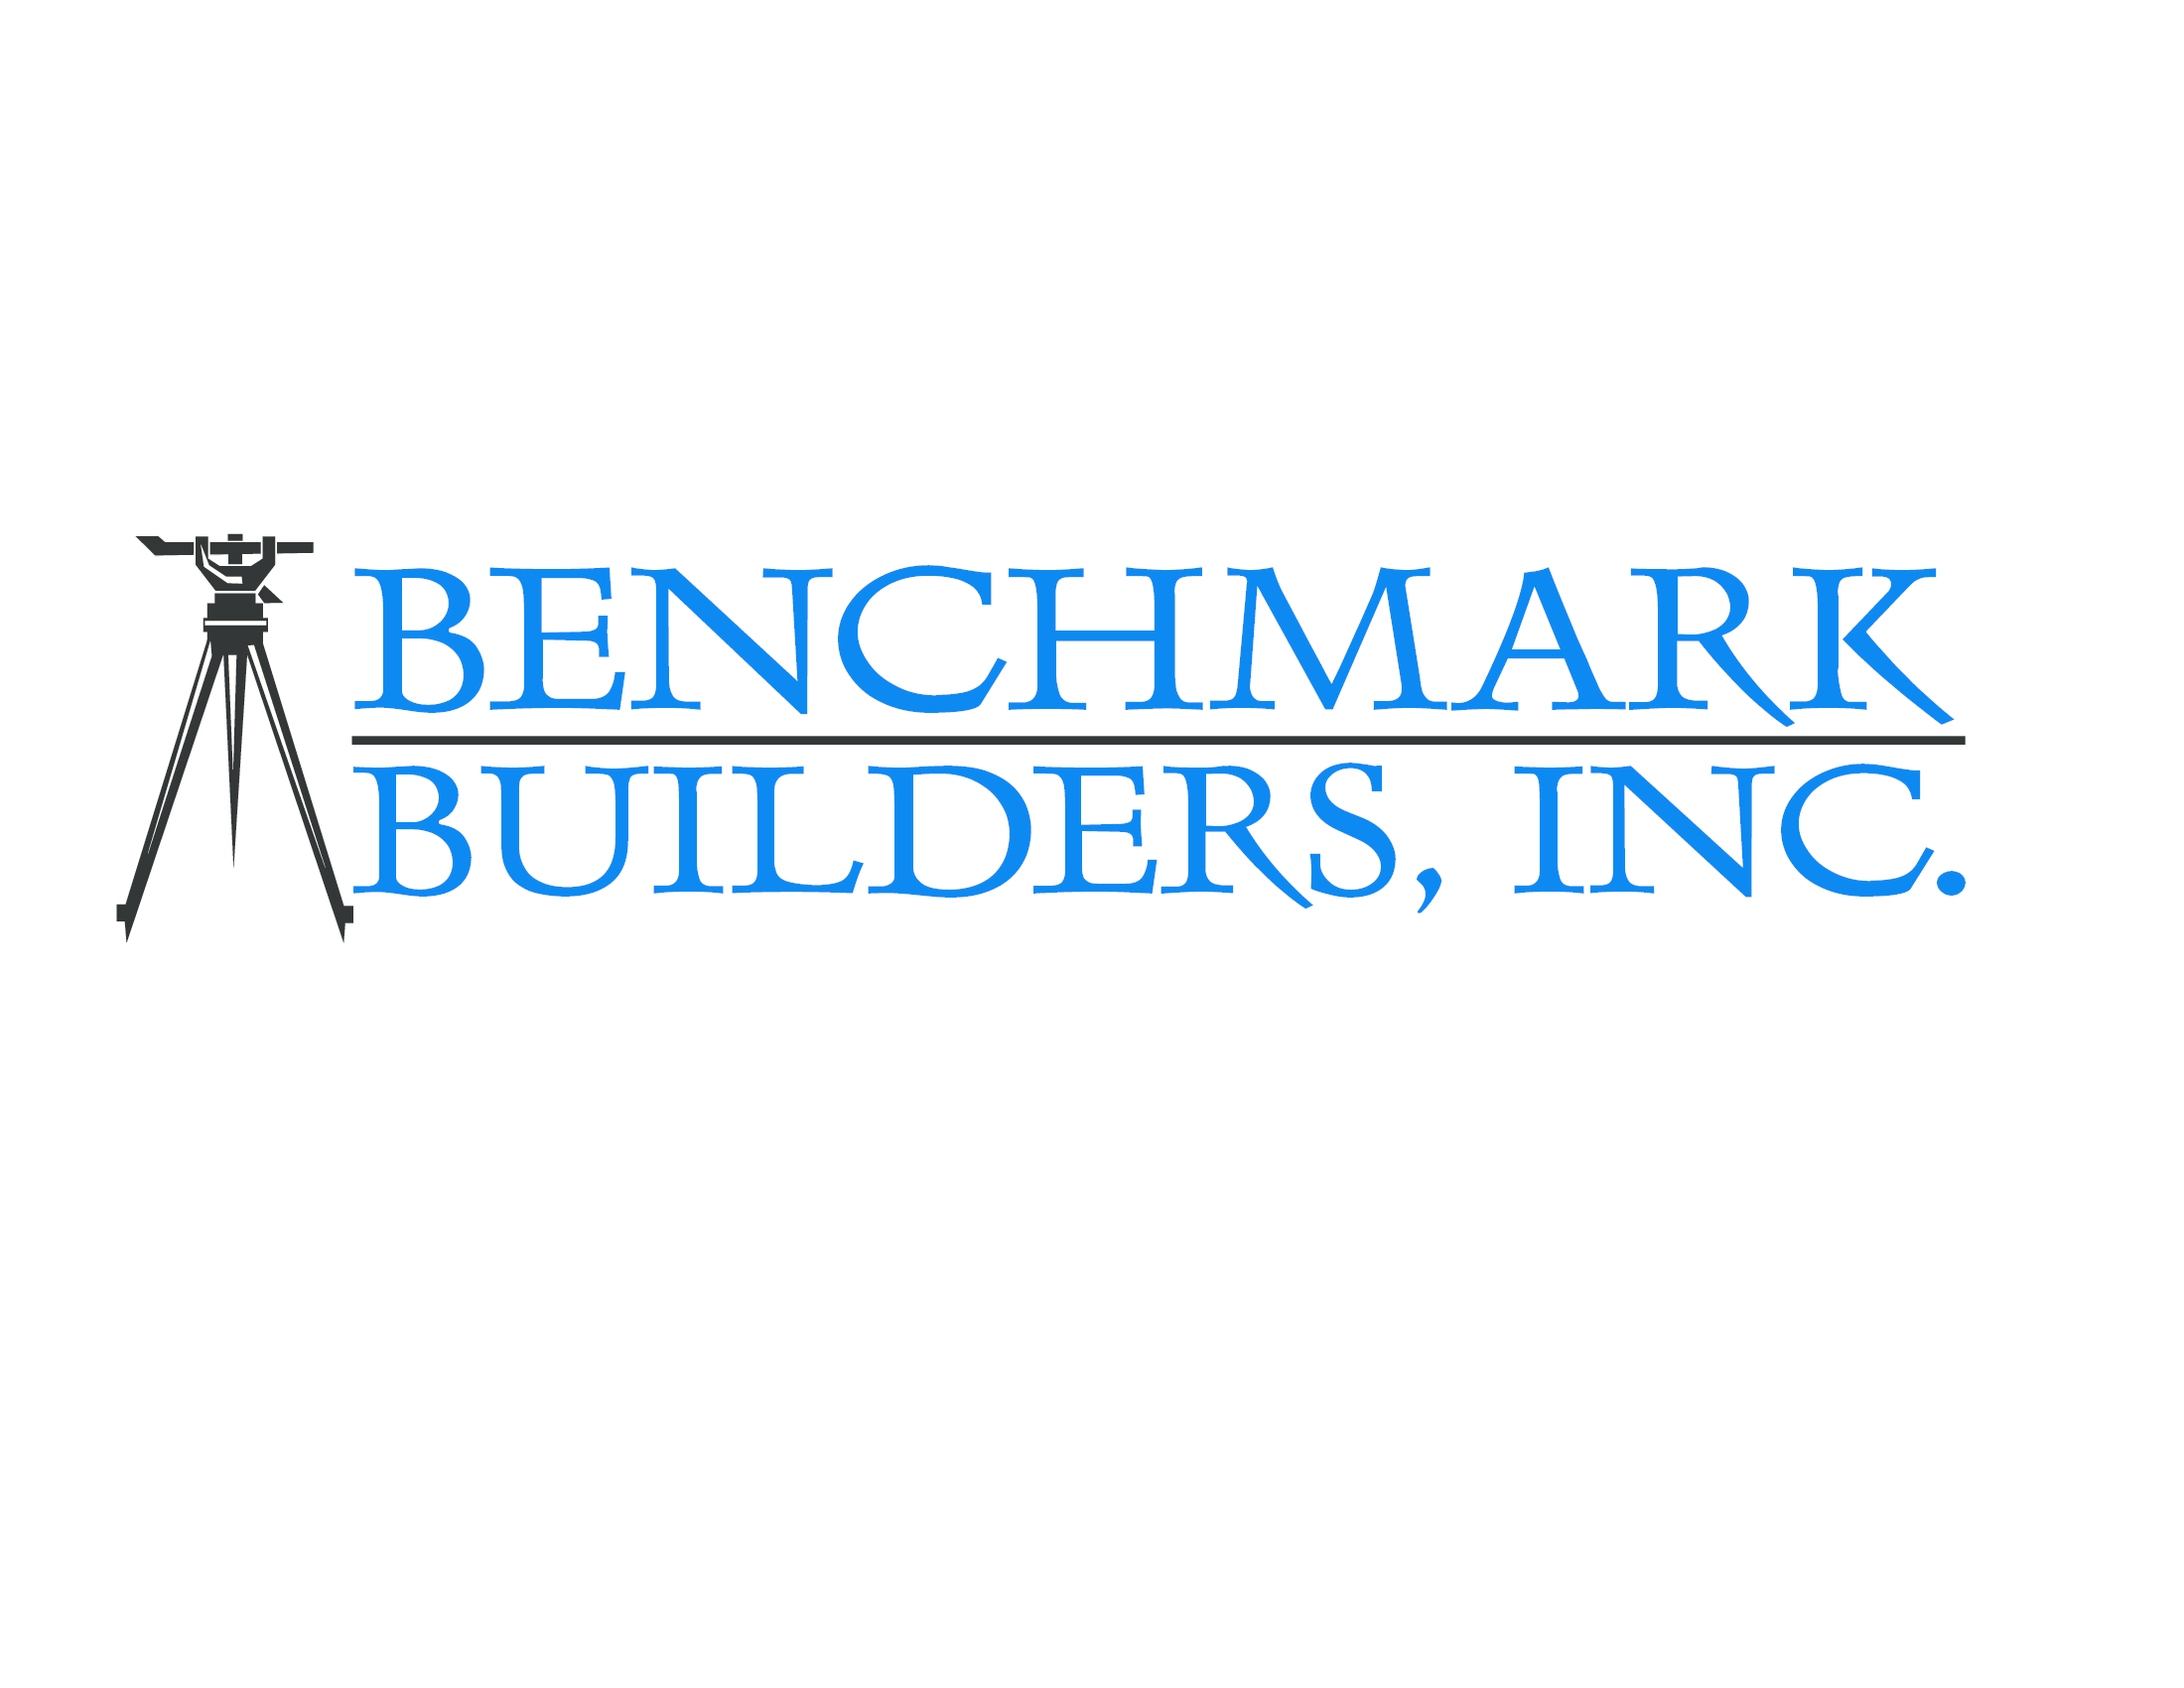 Benchmark Builders, Inc. company logo